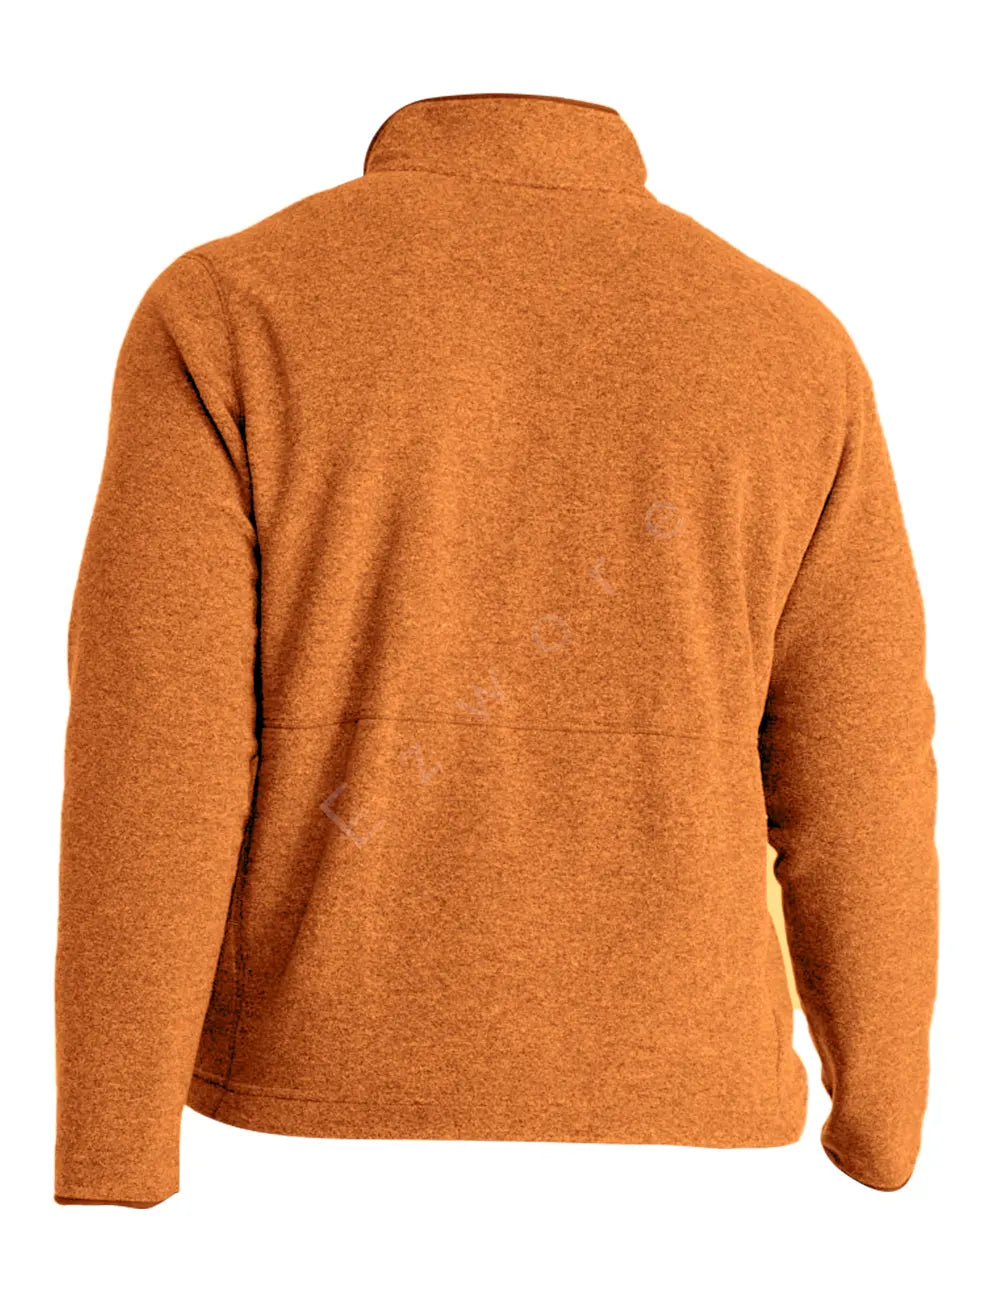 Men's Mountain Classic Orange Fleece Jacket